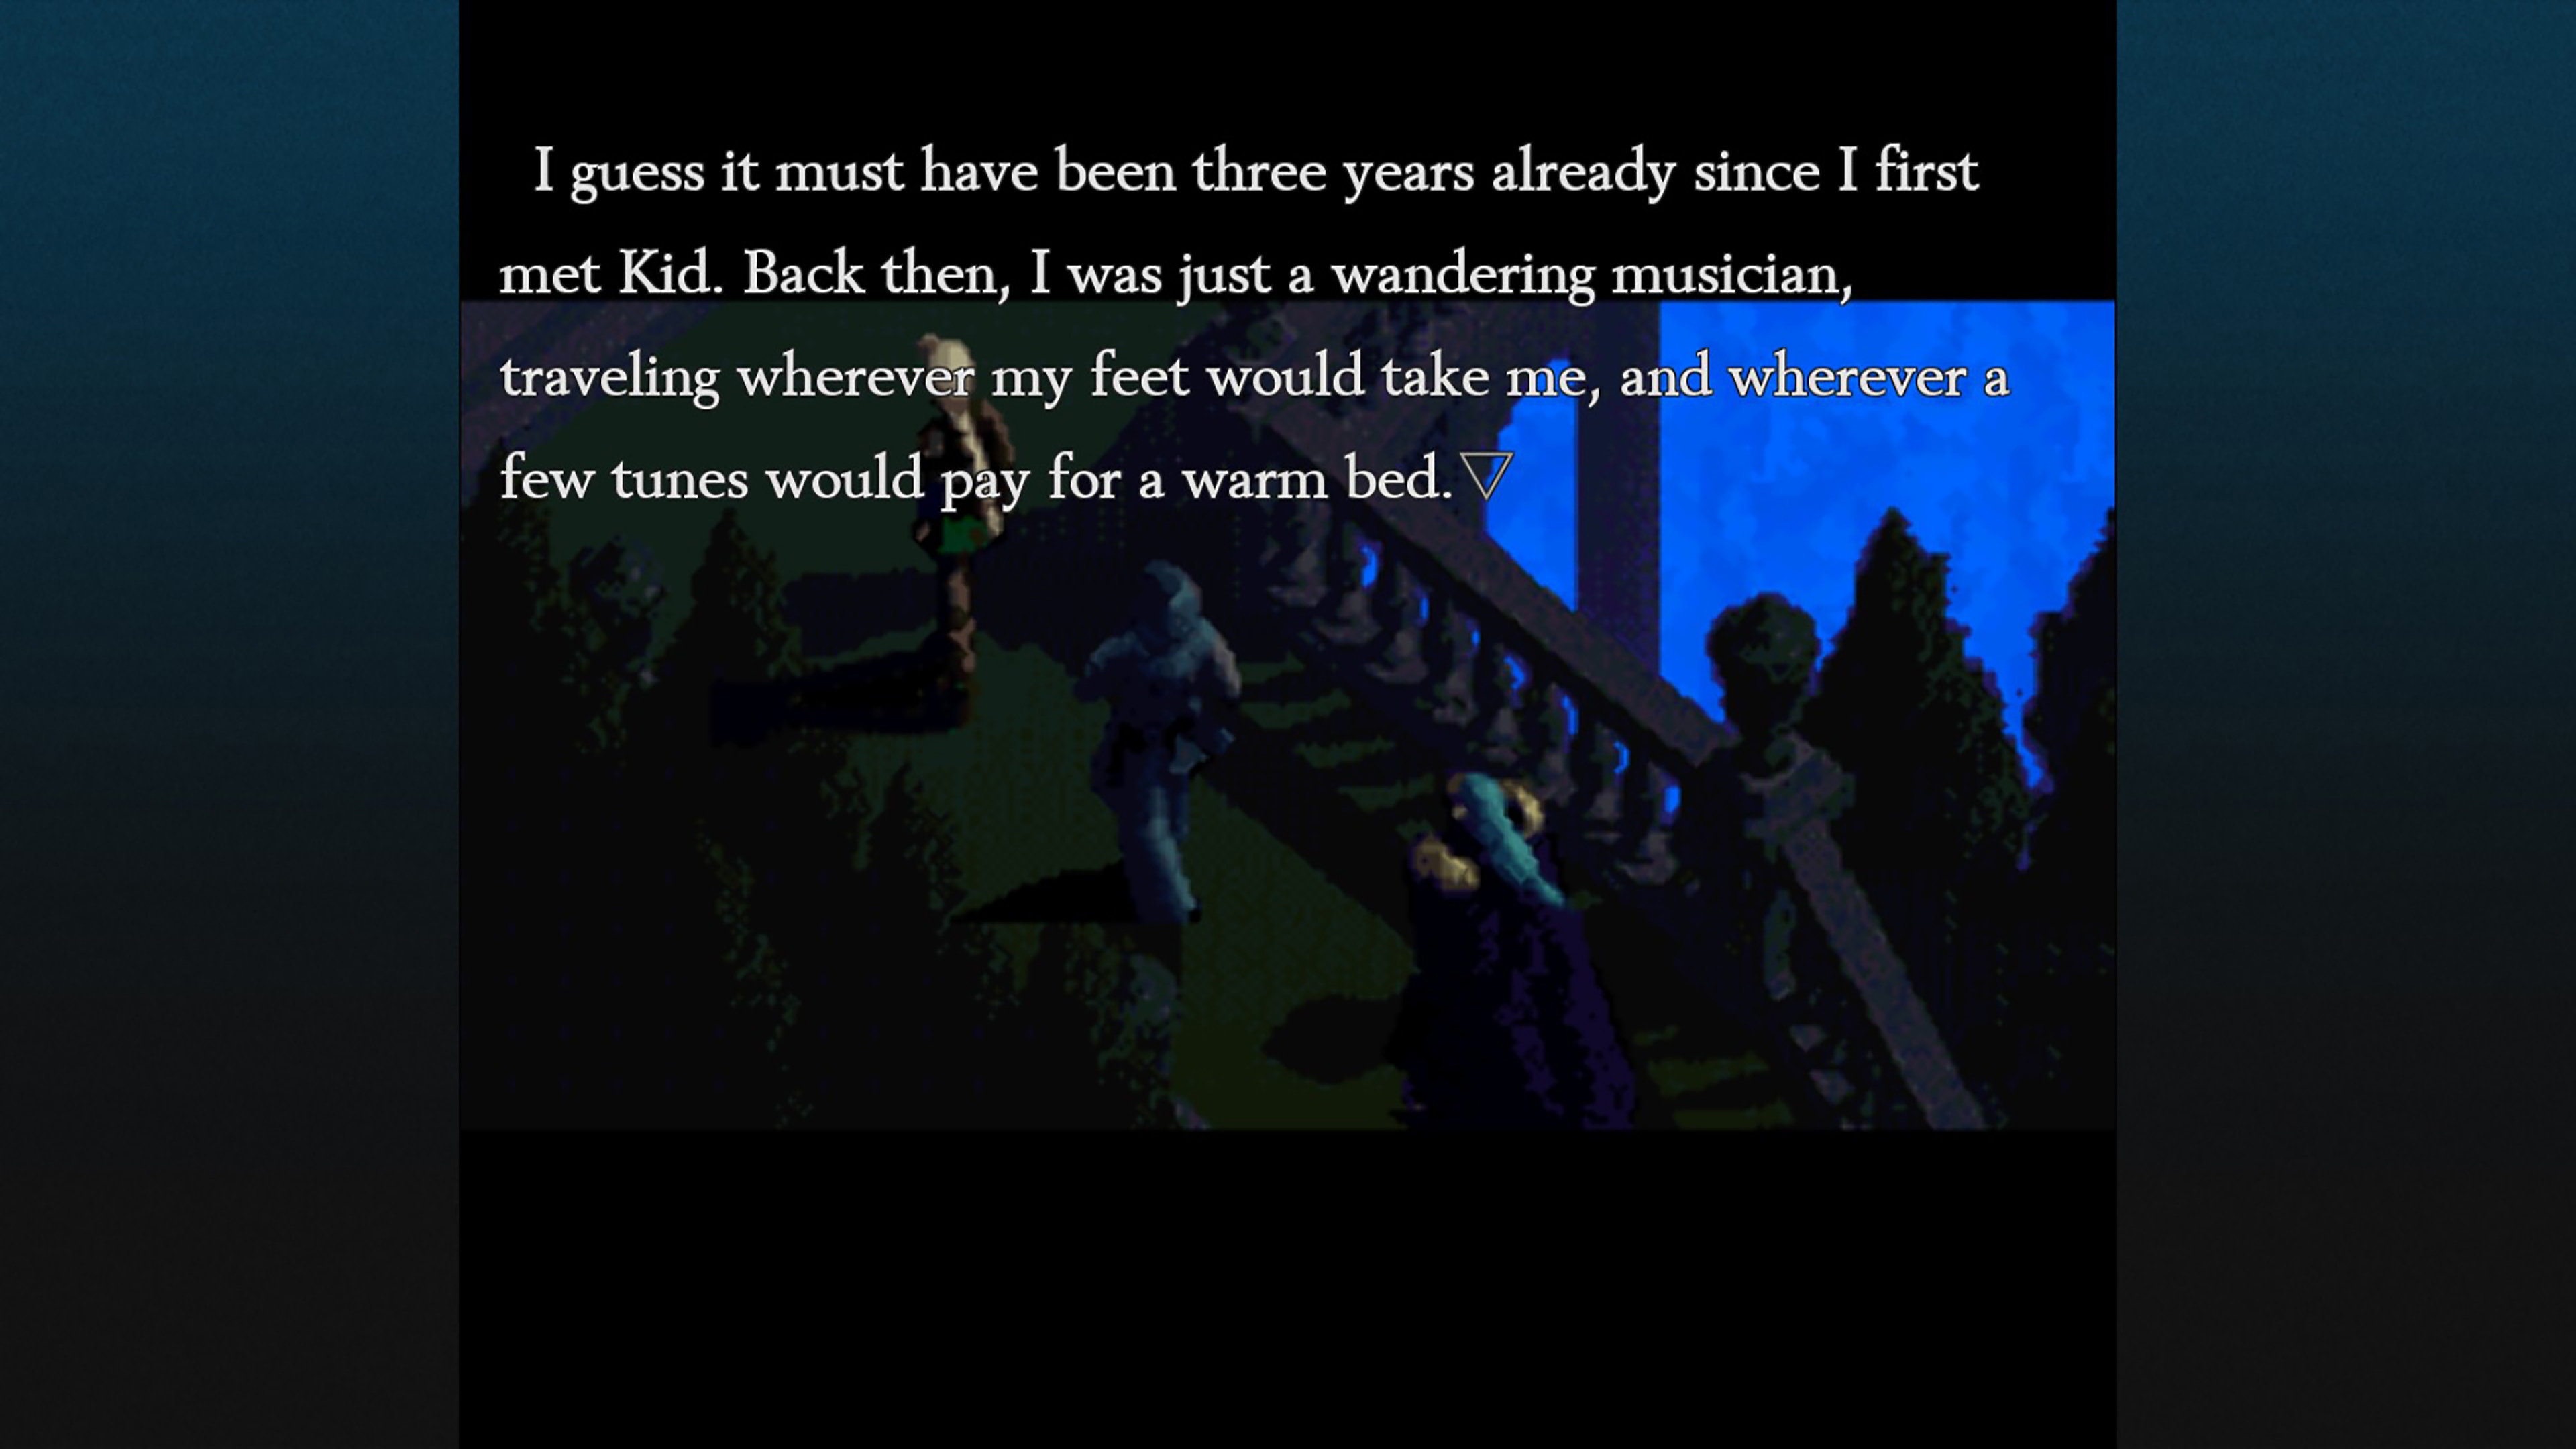 Chrono Cross: The Radical Dreamers Editionin kuvakaappaus, jossa kaksi hahmoa keskustelee